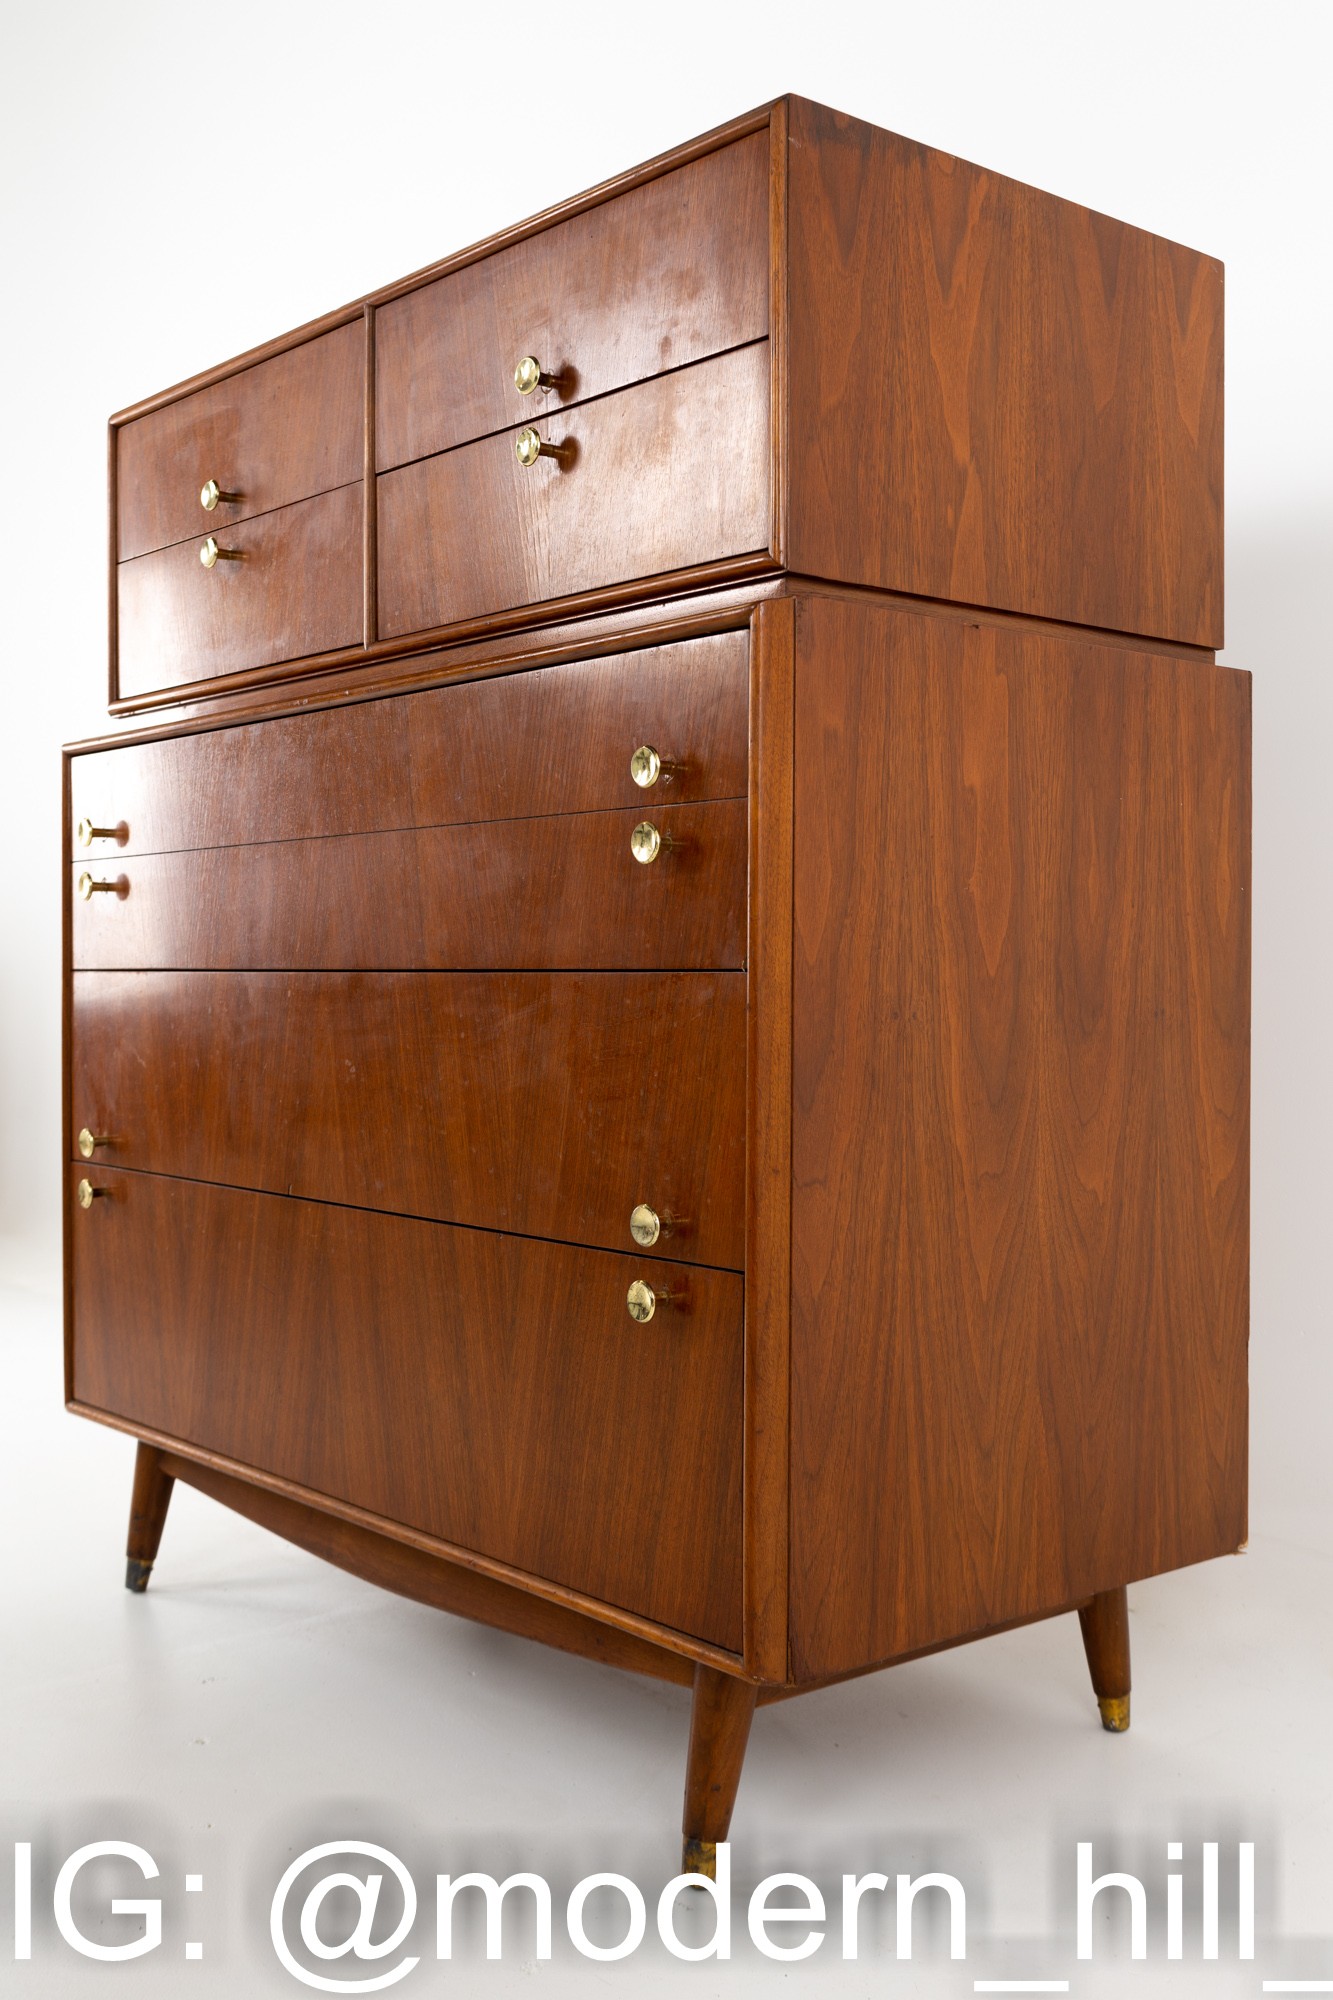 Kroehler Signature Series Style Mid Century Walnut and Brass Highboy Dresser